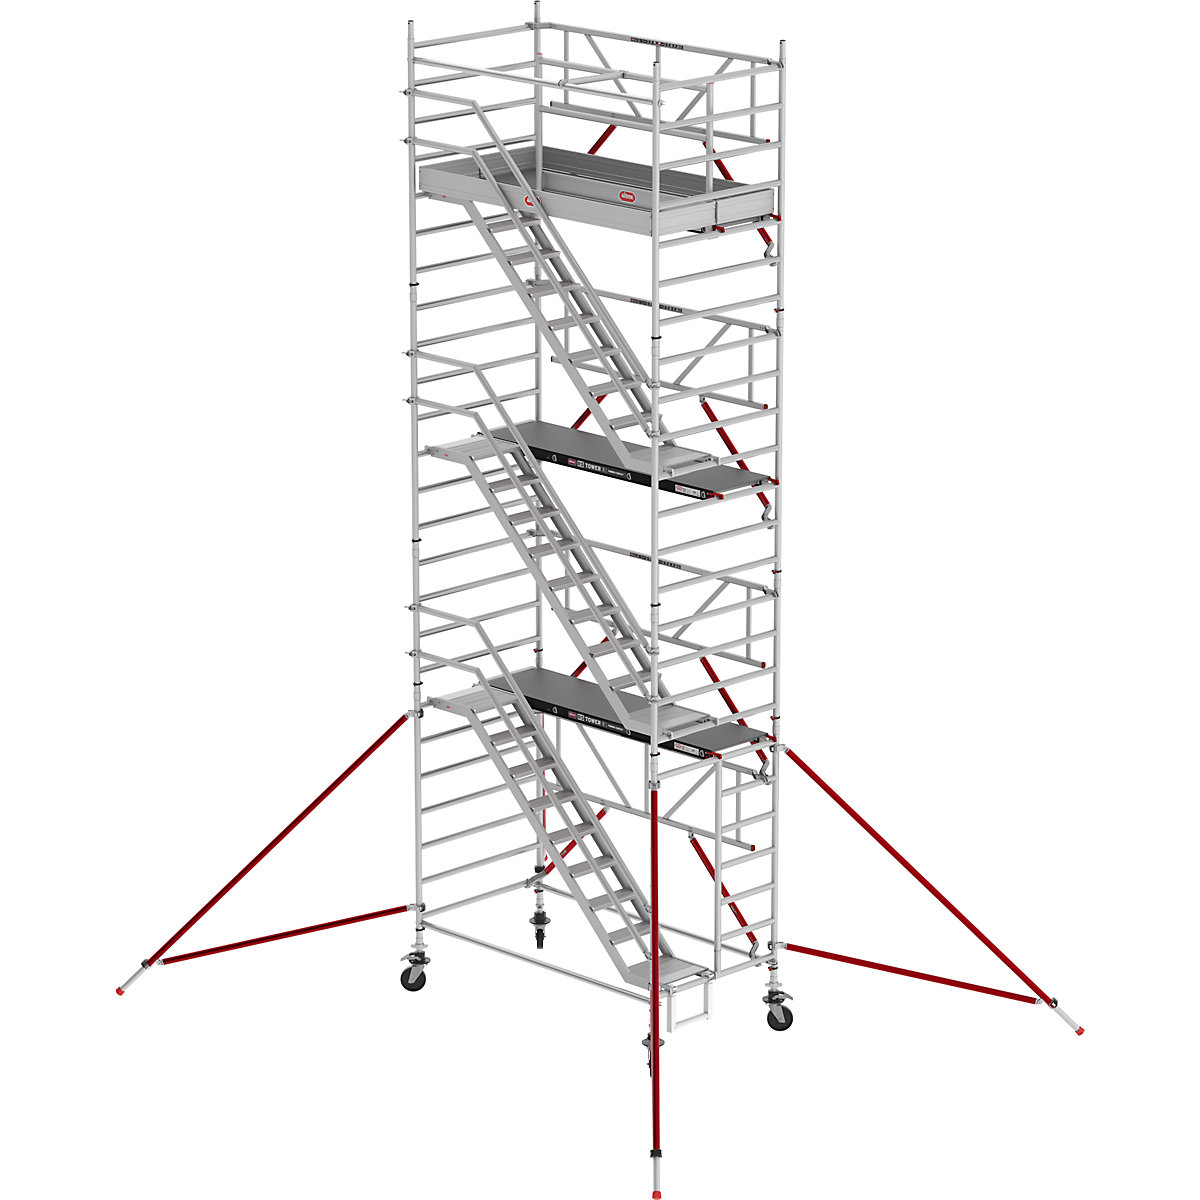 Oder s stopnicami RS TOWER 53, širok – Altrex, Fiber-Deck®, dolžina 1,85 m, delovna višina 8,20 m